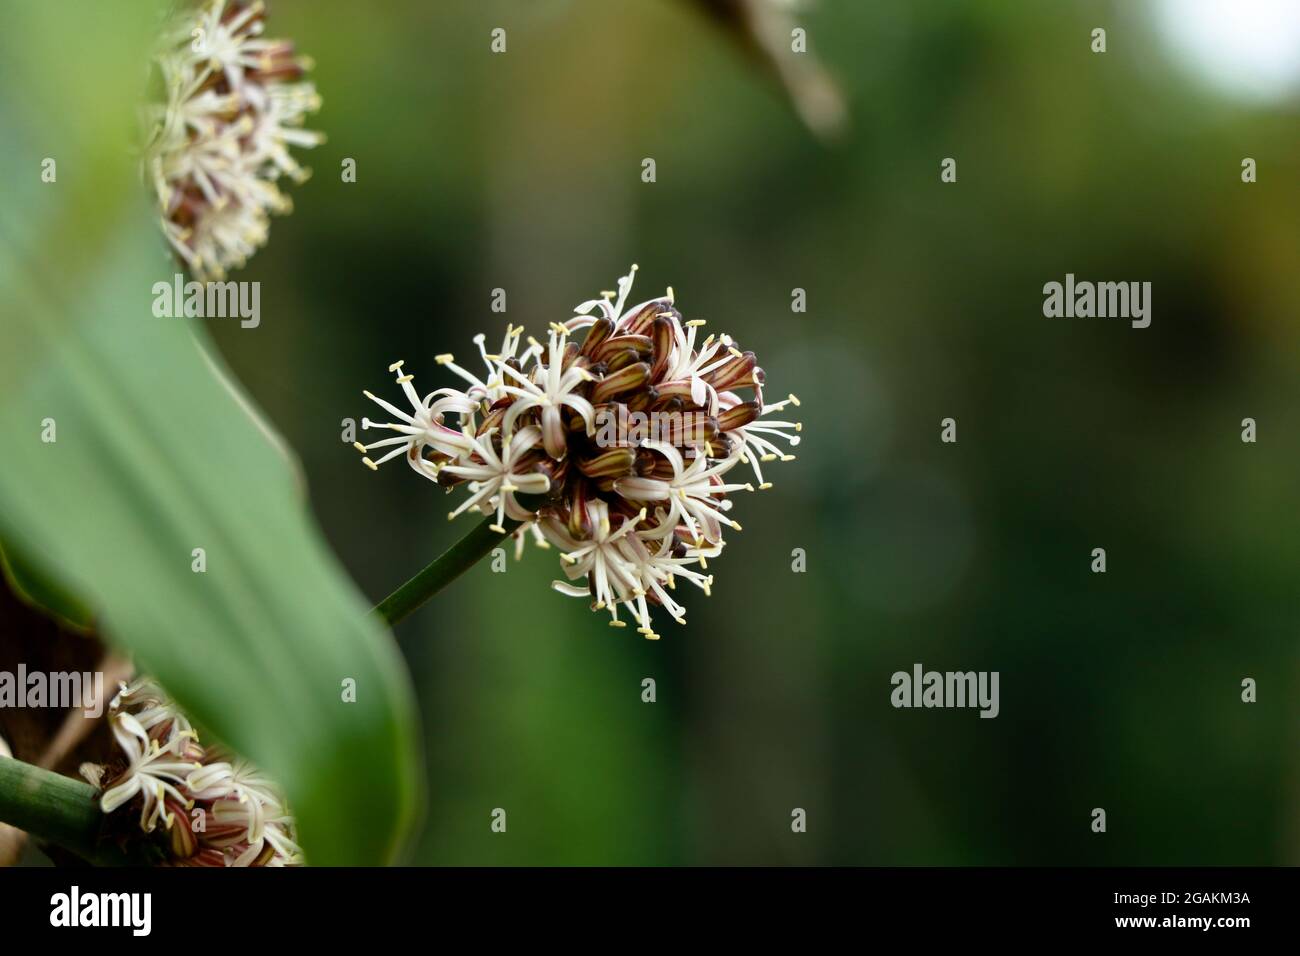 Flowers of Dracaena fragrans or cornstalk dracaena  commonly known as corn plant, selective focus Stock Photo